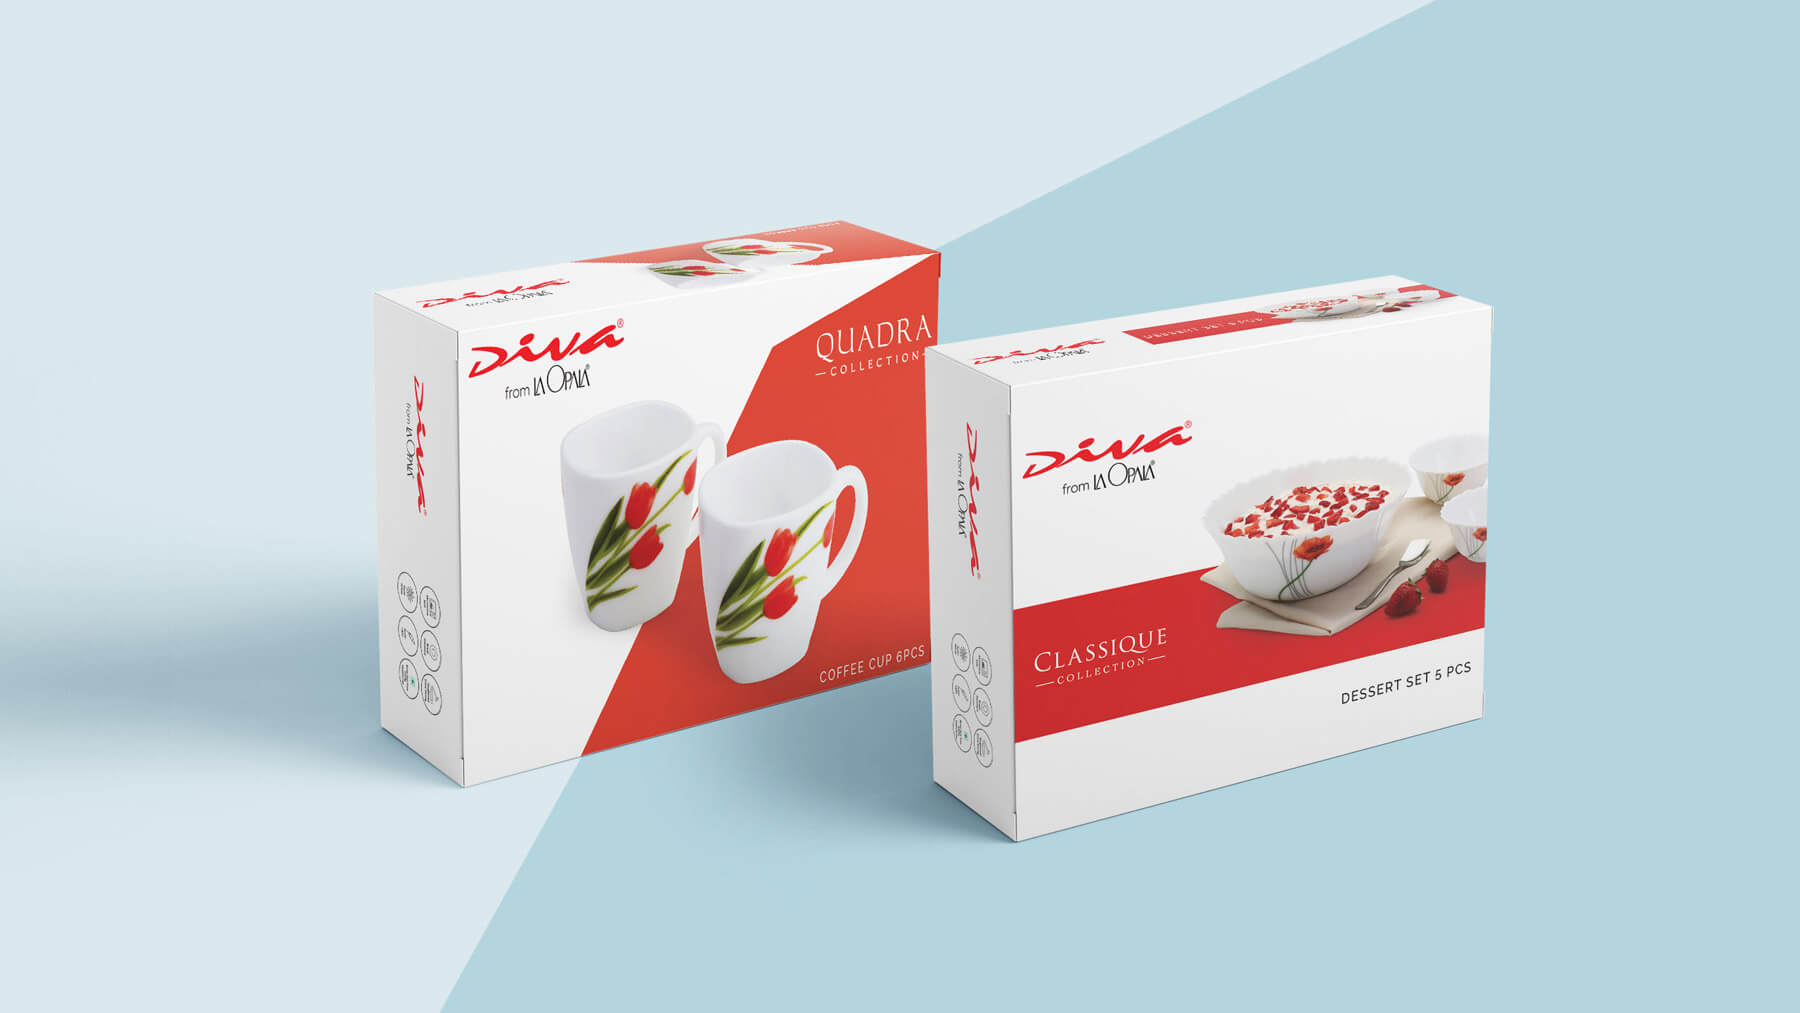 laopala packaging design